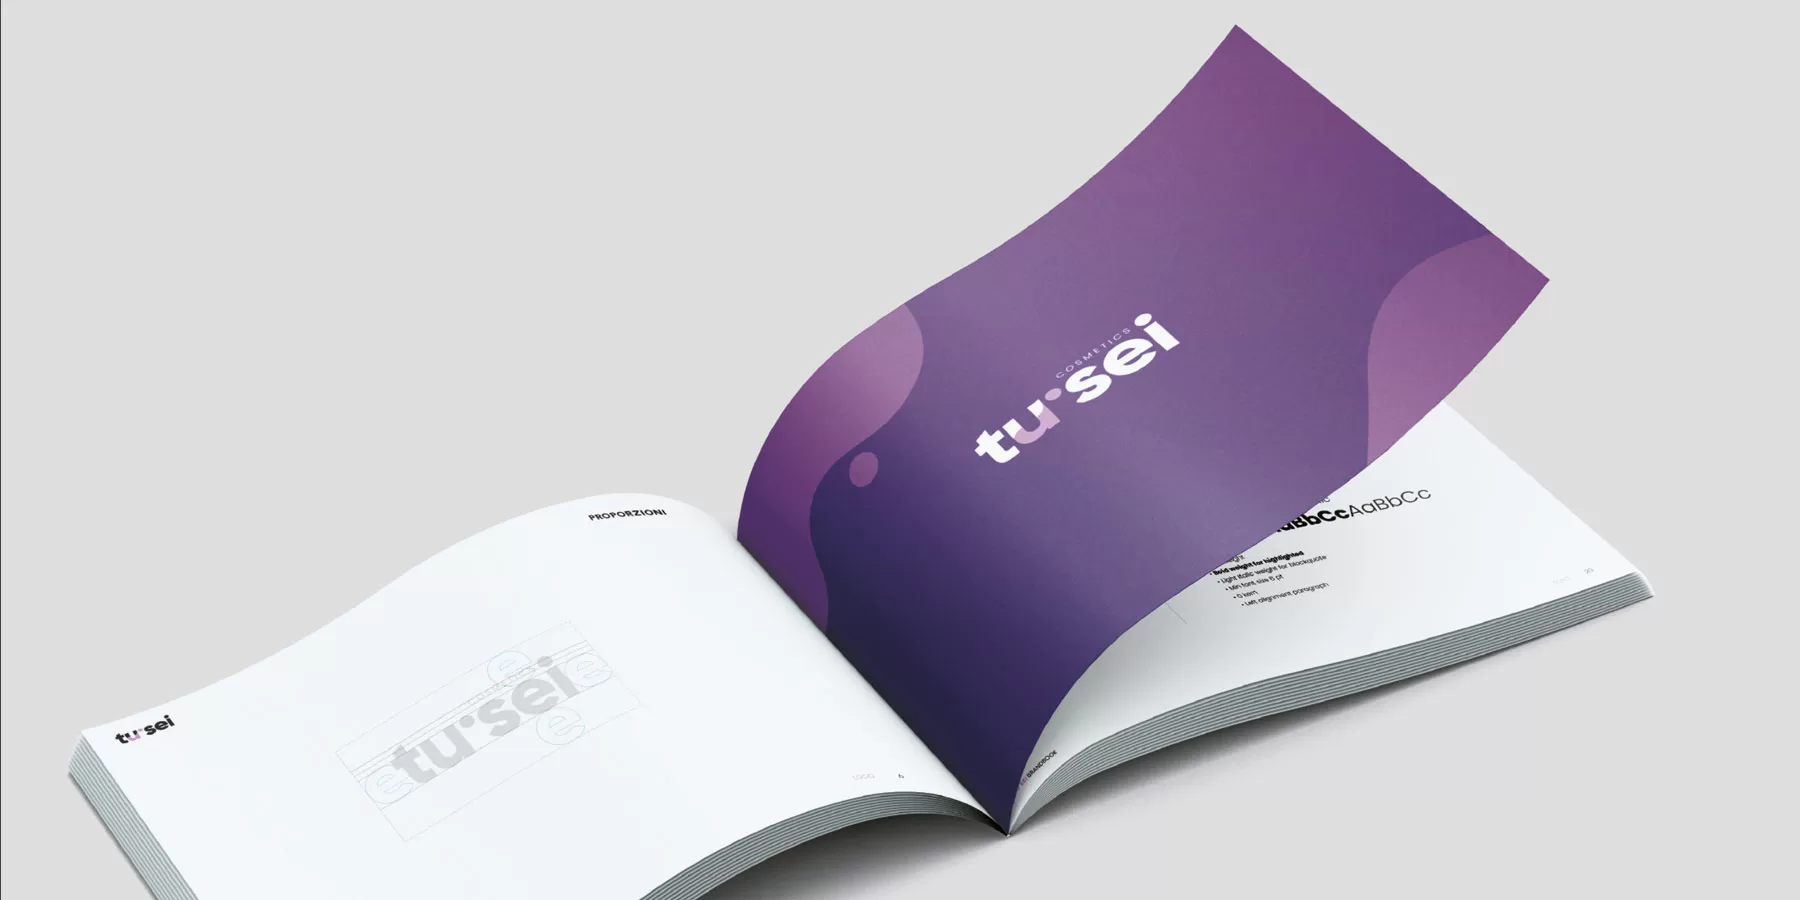 TUSEI Cosmetics - Brand Book